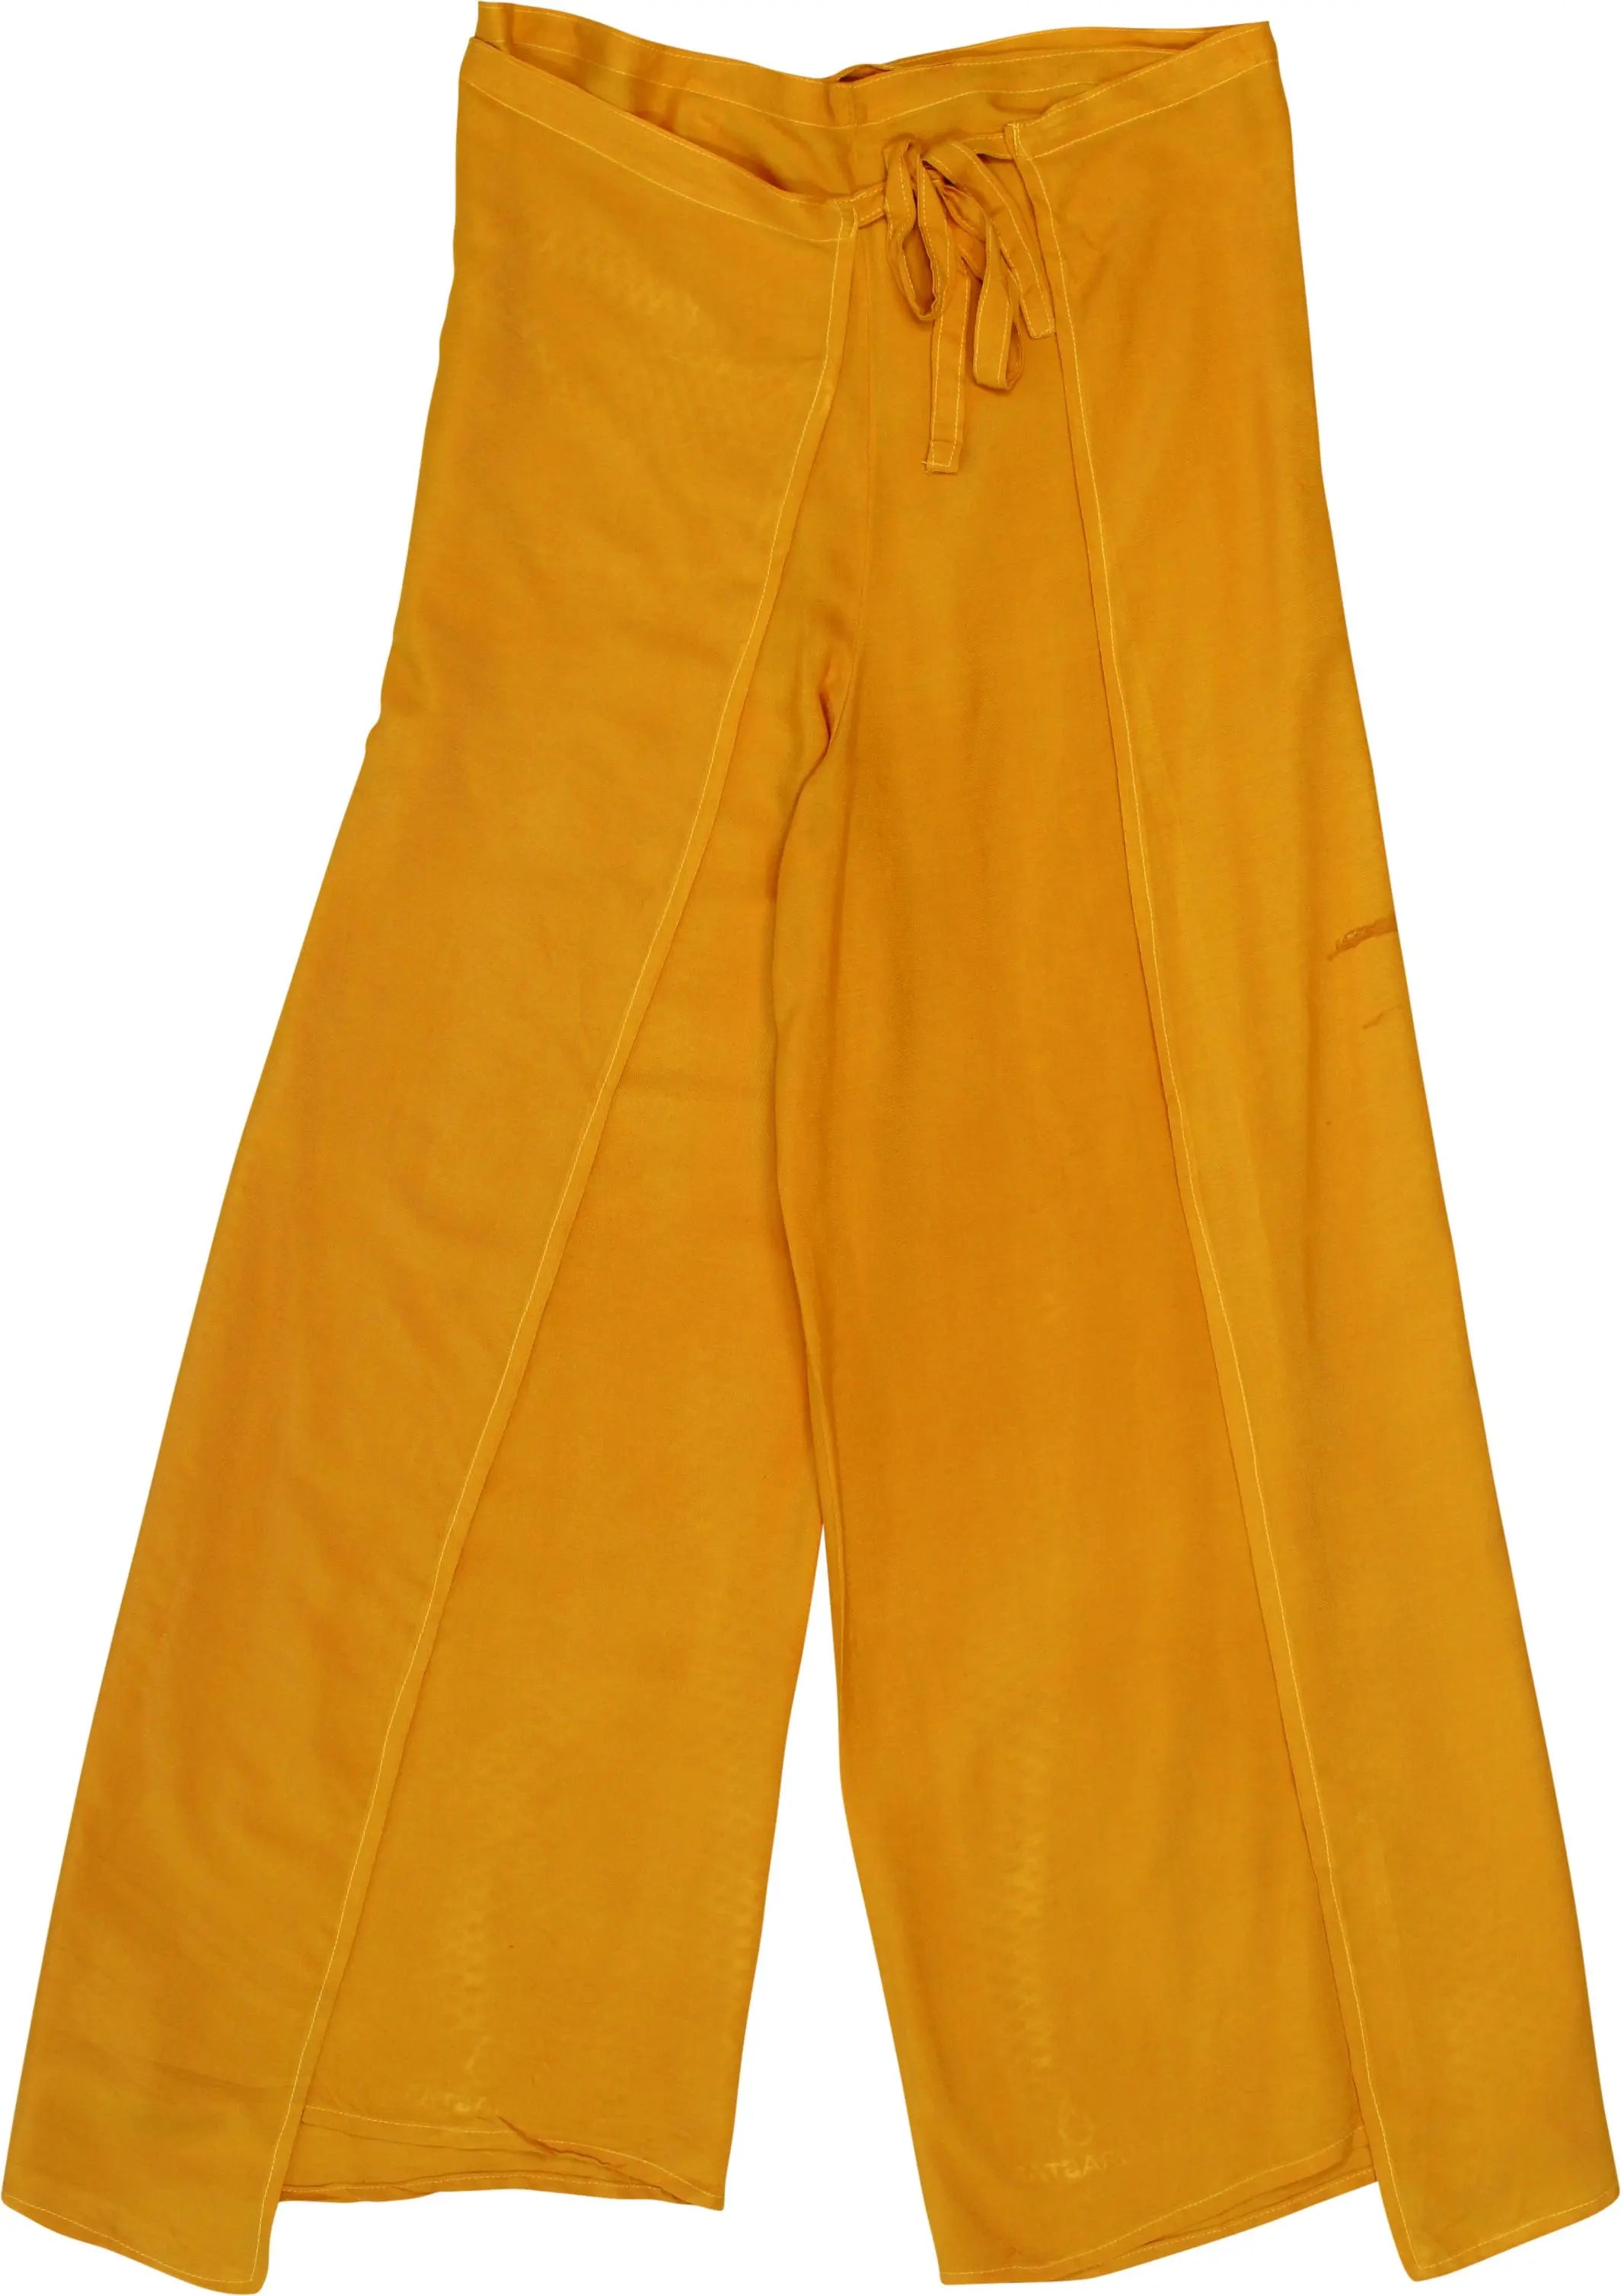 Putka Baron - Wrap Pants- ThriftTale.com - Vintage and second handclothing